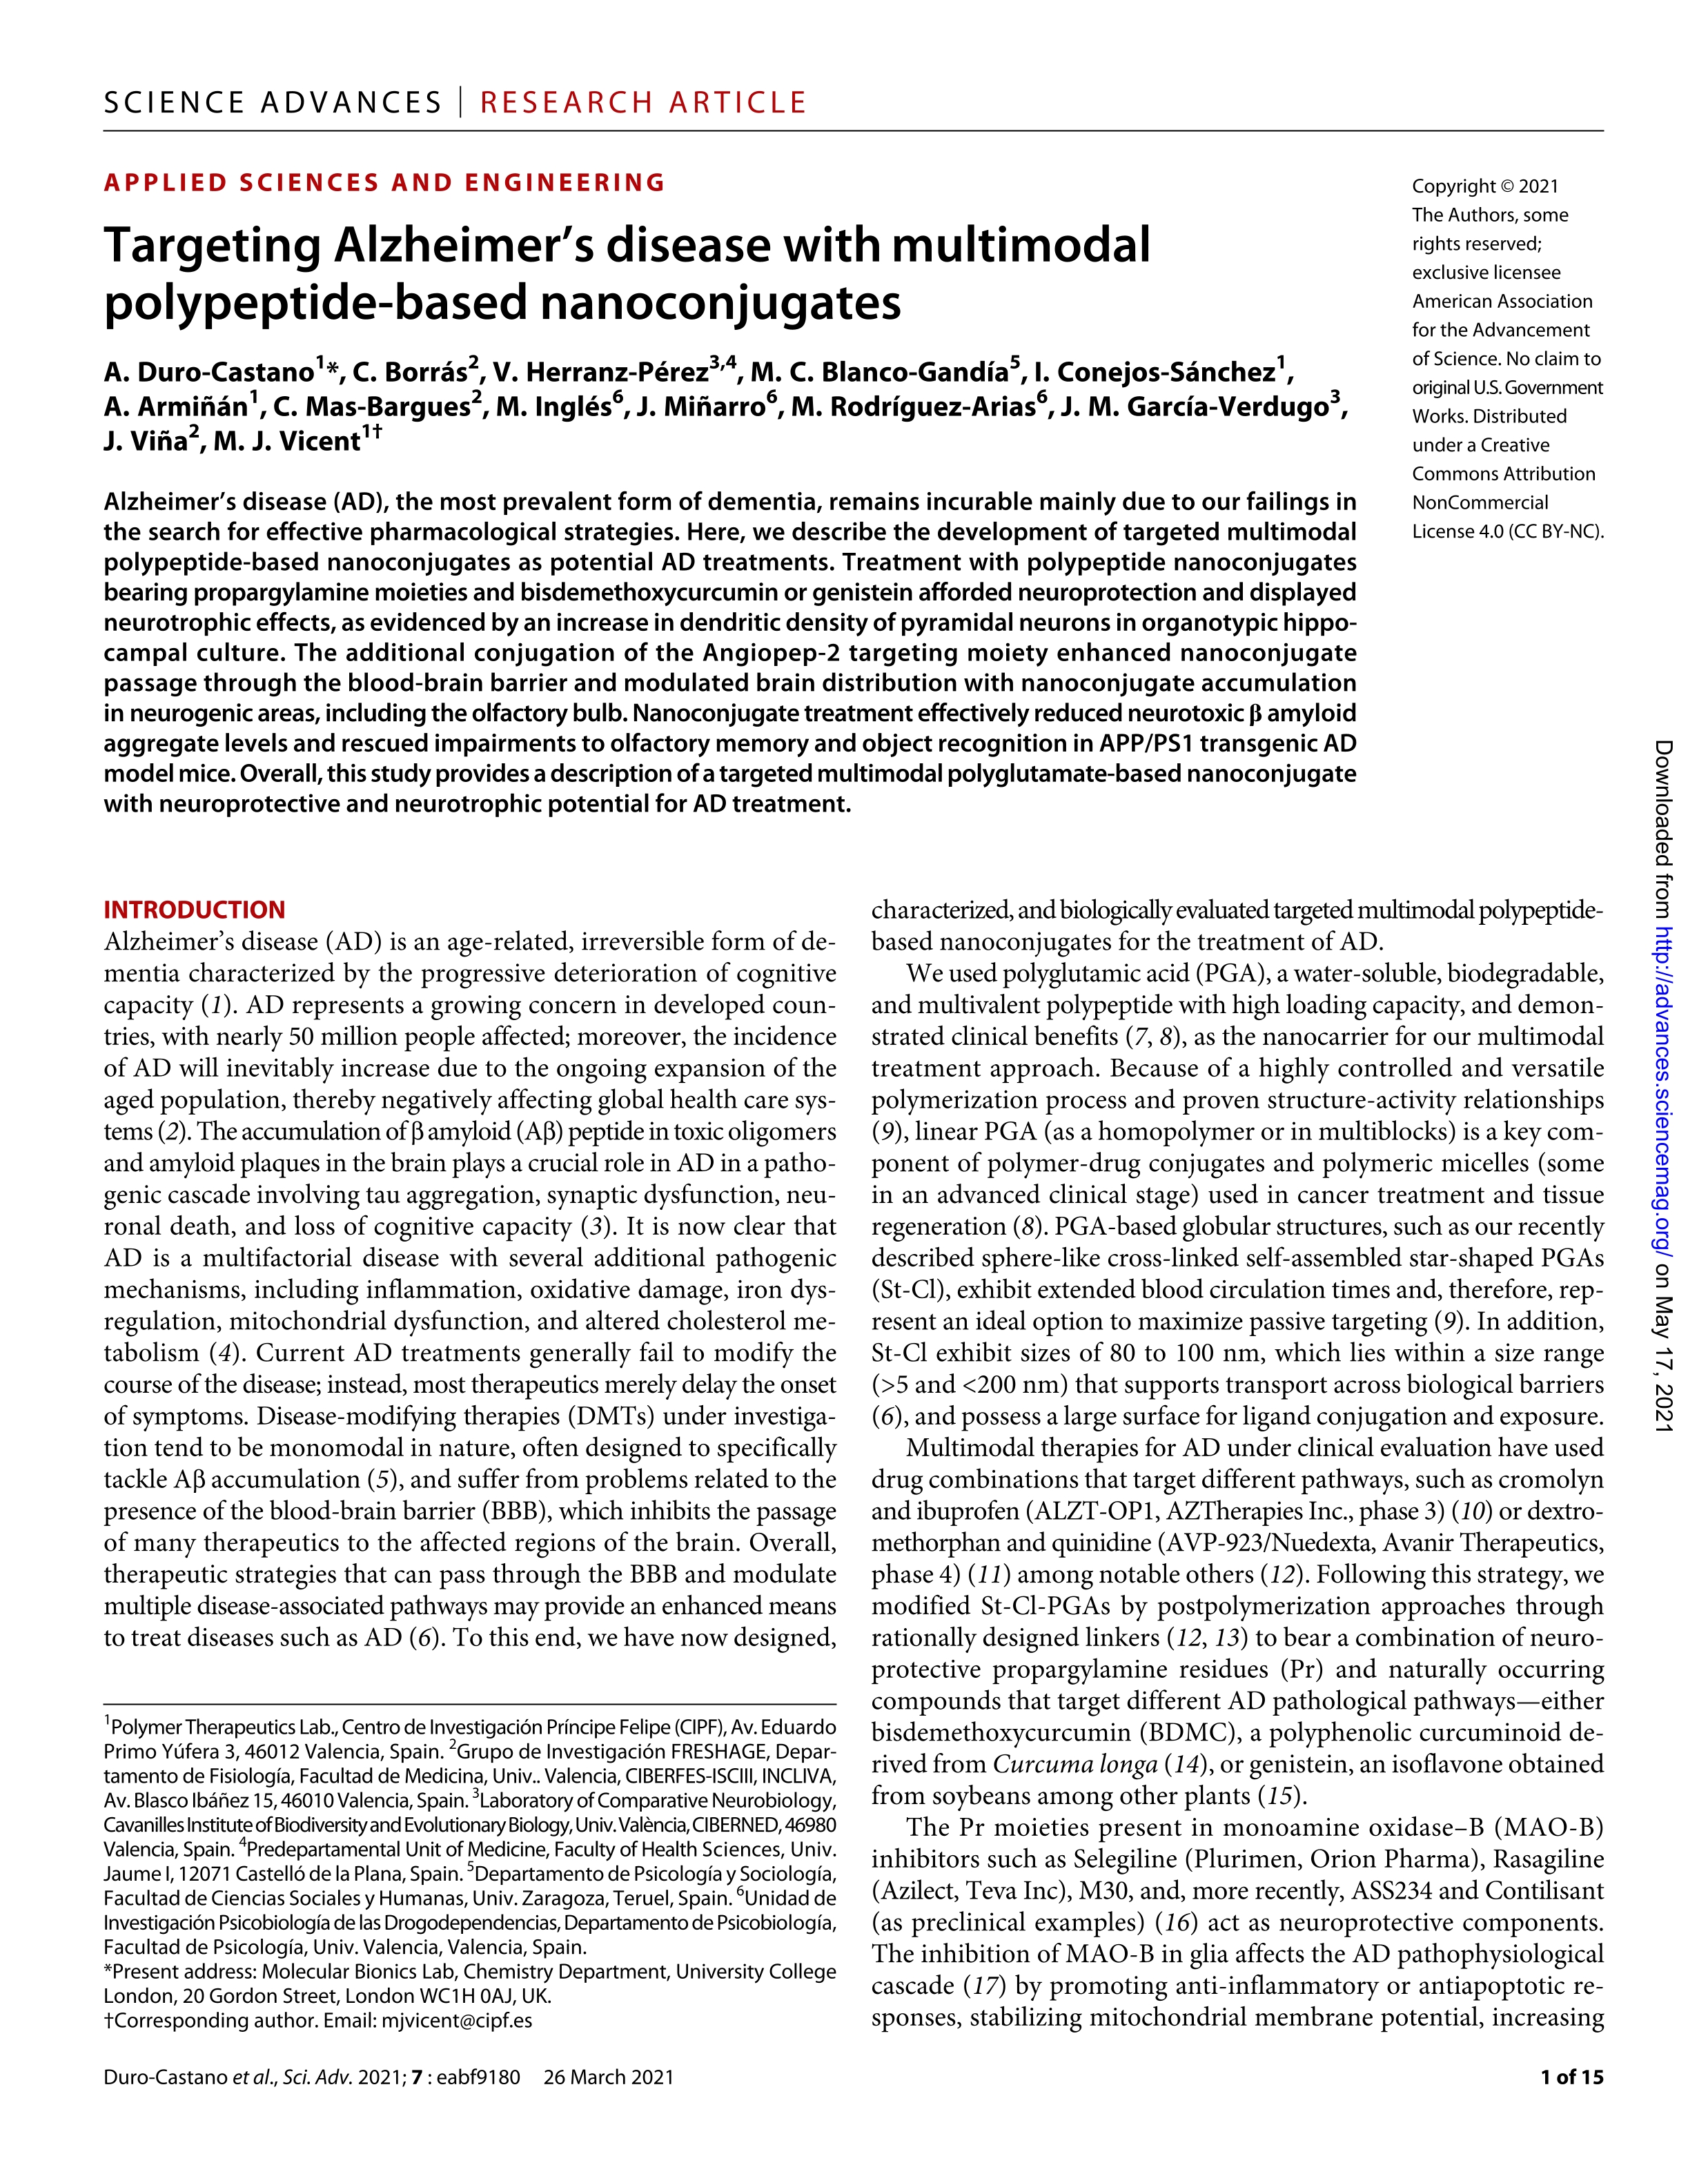 Targeting Alzheimer’s disease with multimodal polypeptide-based nanoconjugates